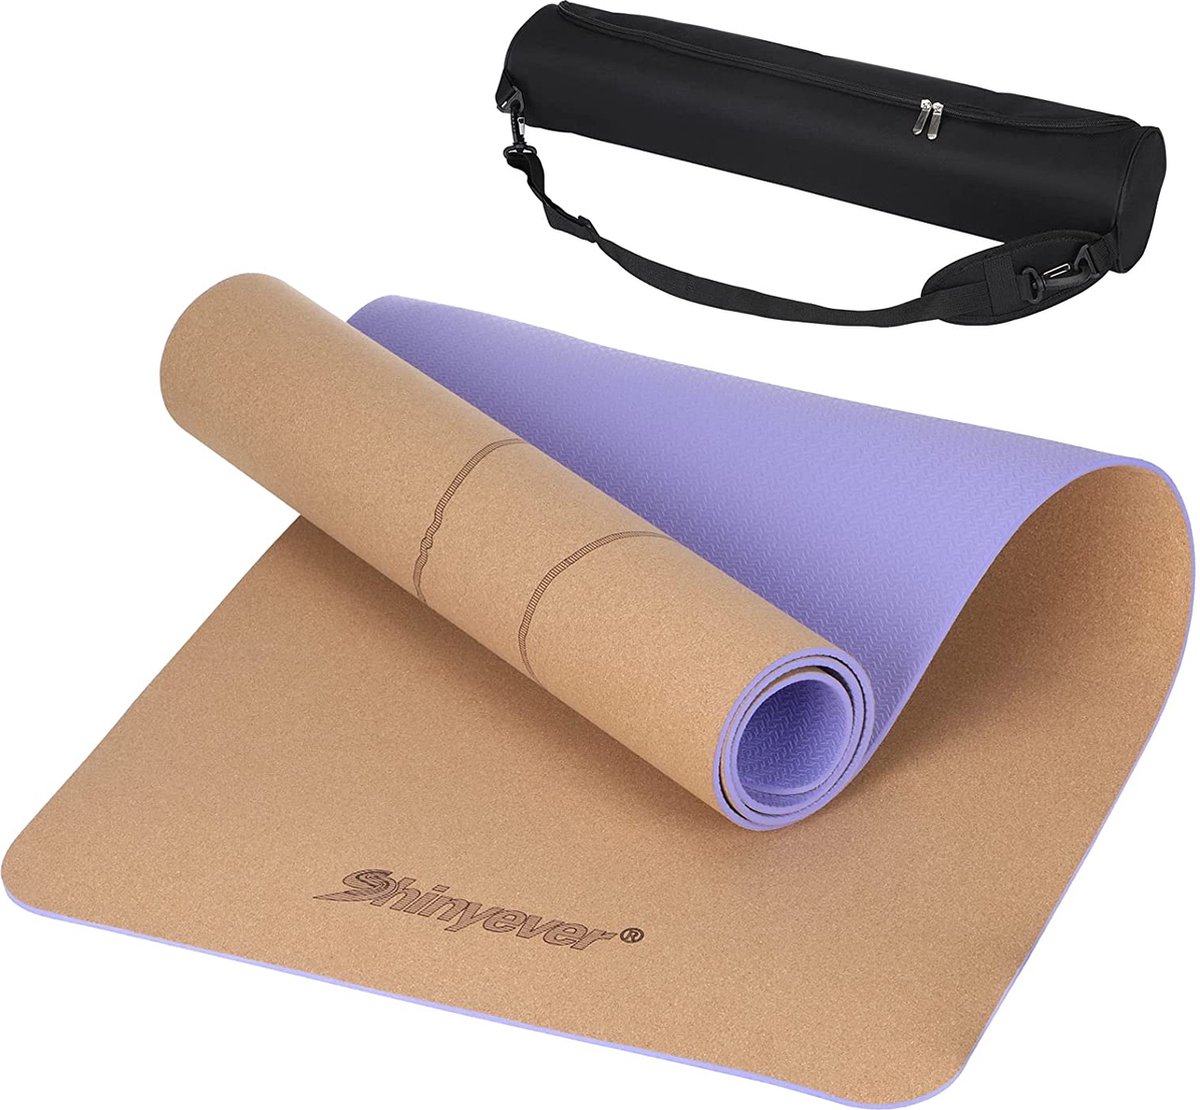 Yogamat - anti slip - antislip - fitness - gym mat